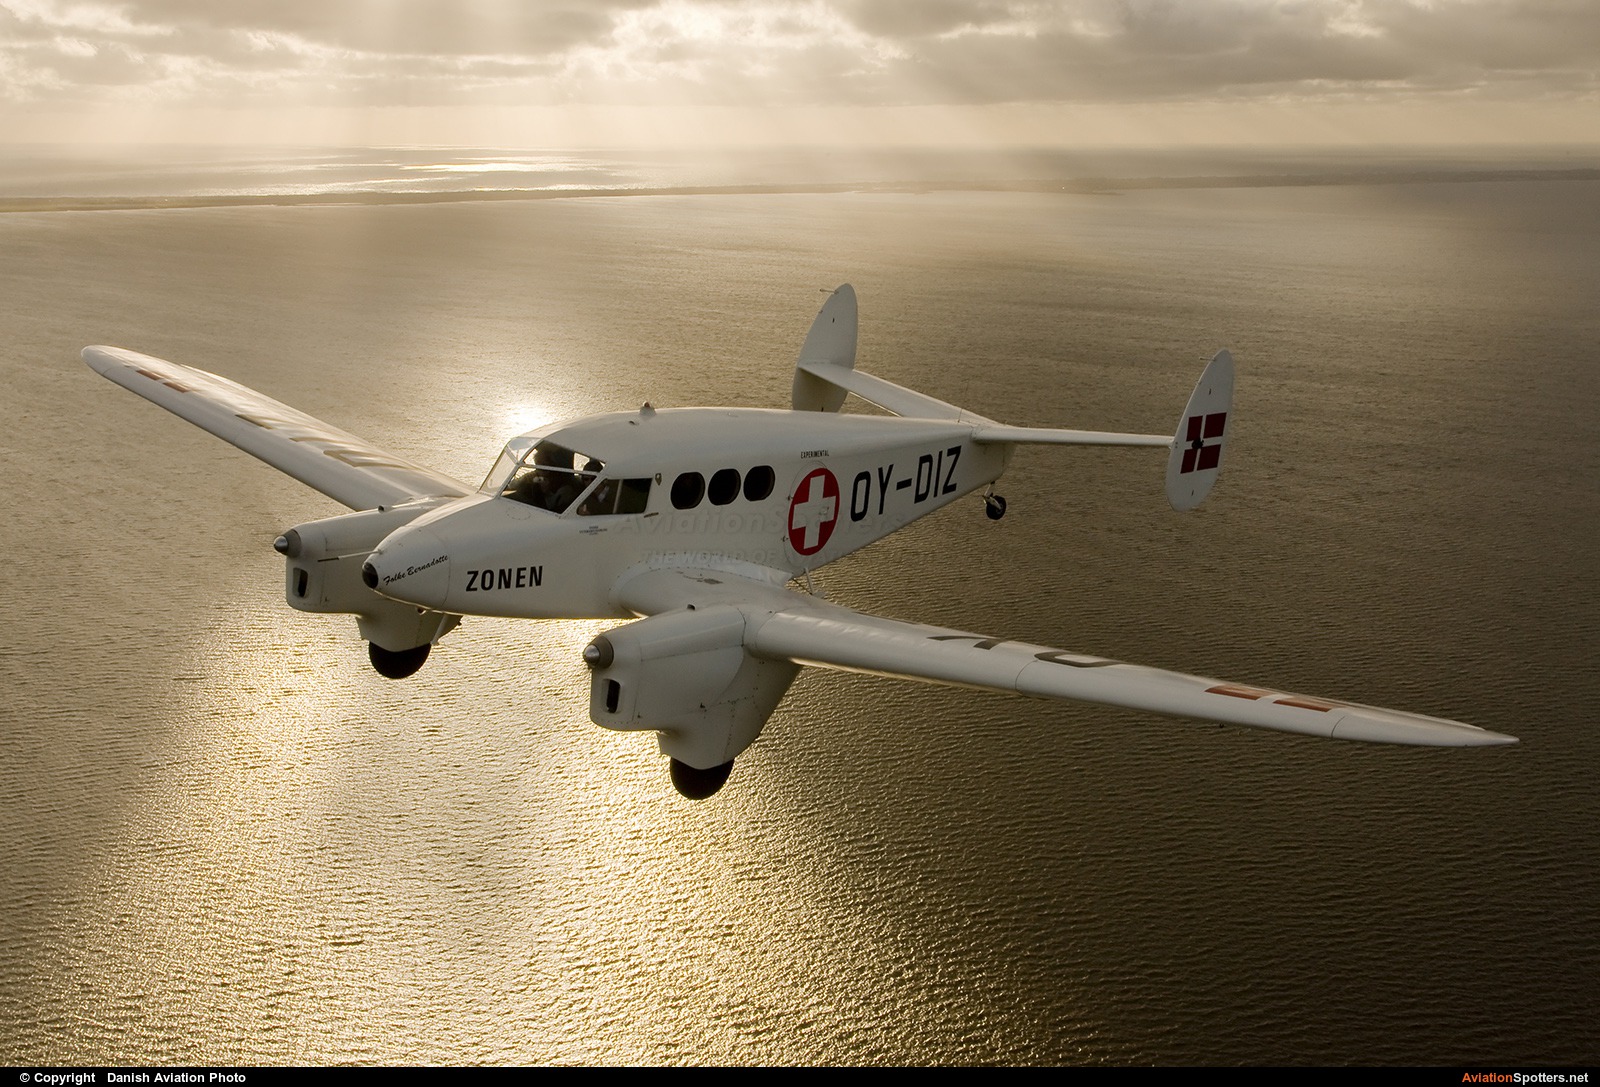   KZ IV  (OY-DIZ) By Danish Aviation Photo (Danish Aviation Photo)